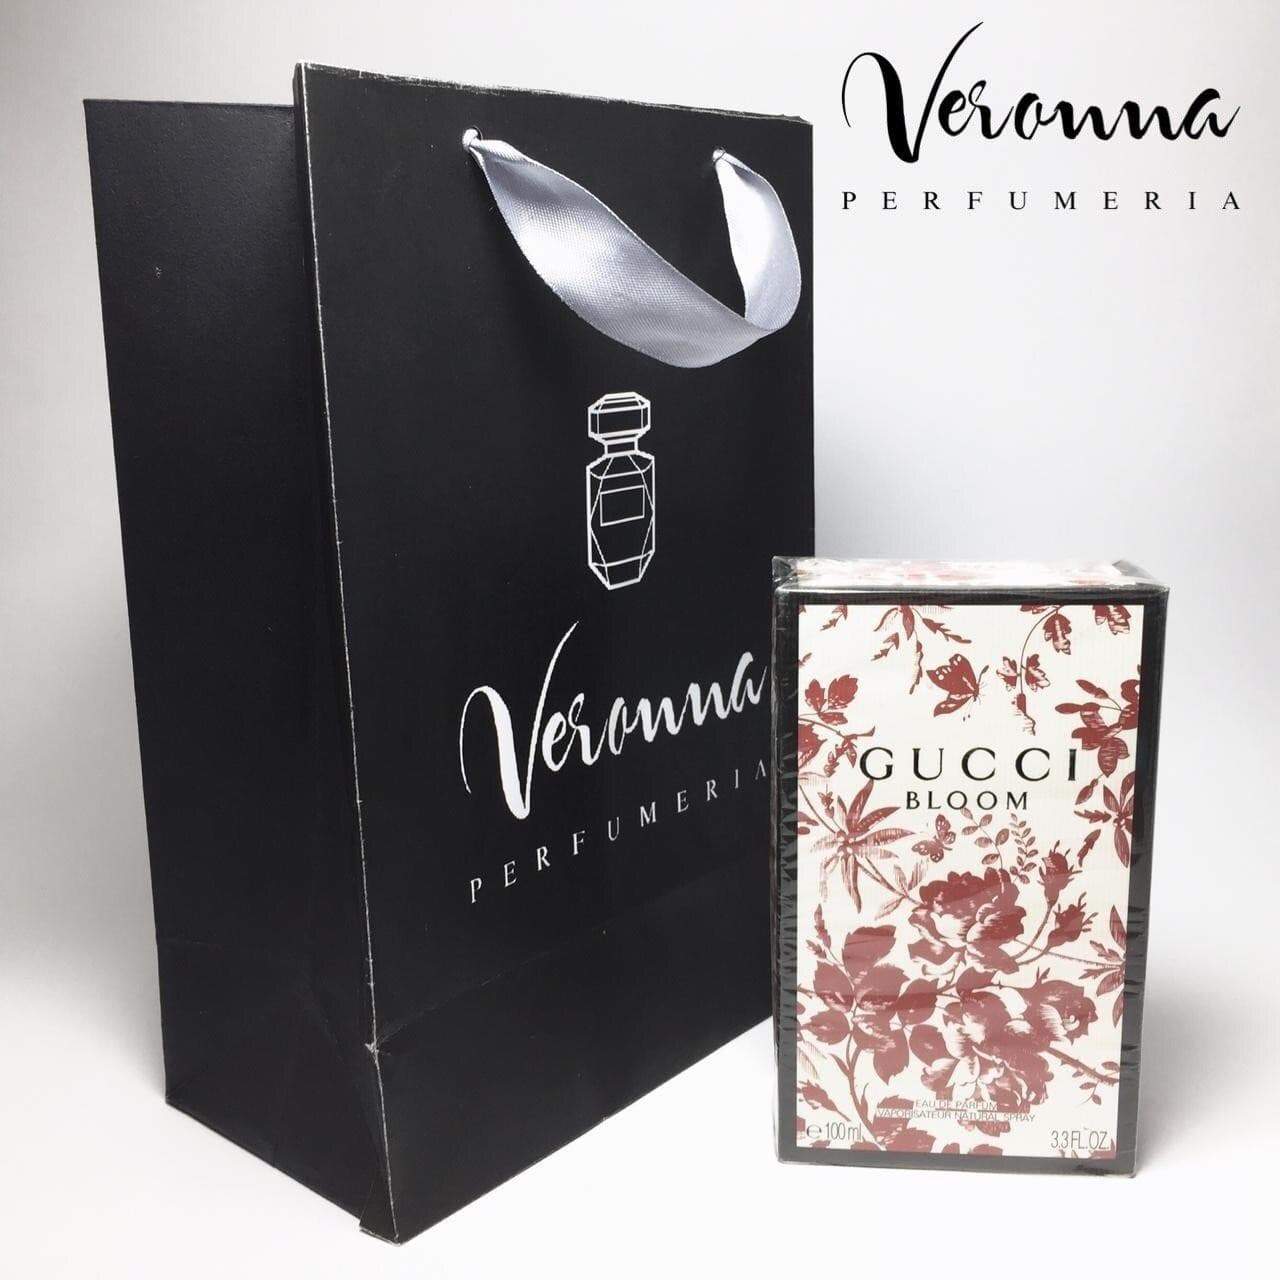 Gucci Bloom Eau De Parfum 1.1 + Decant